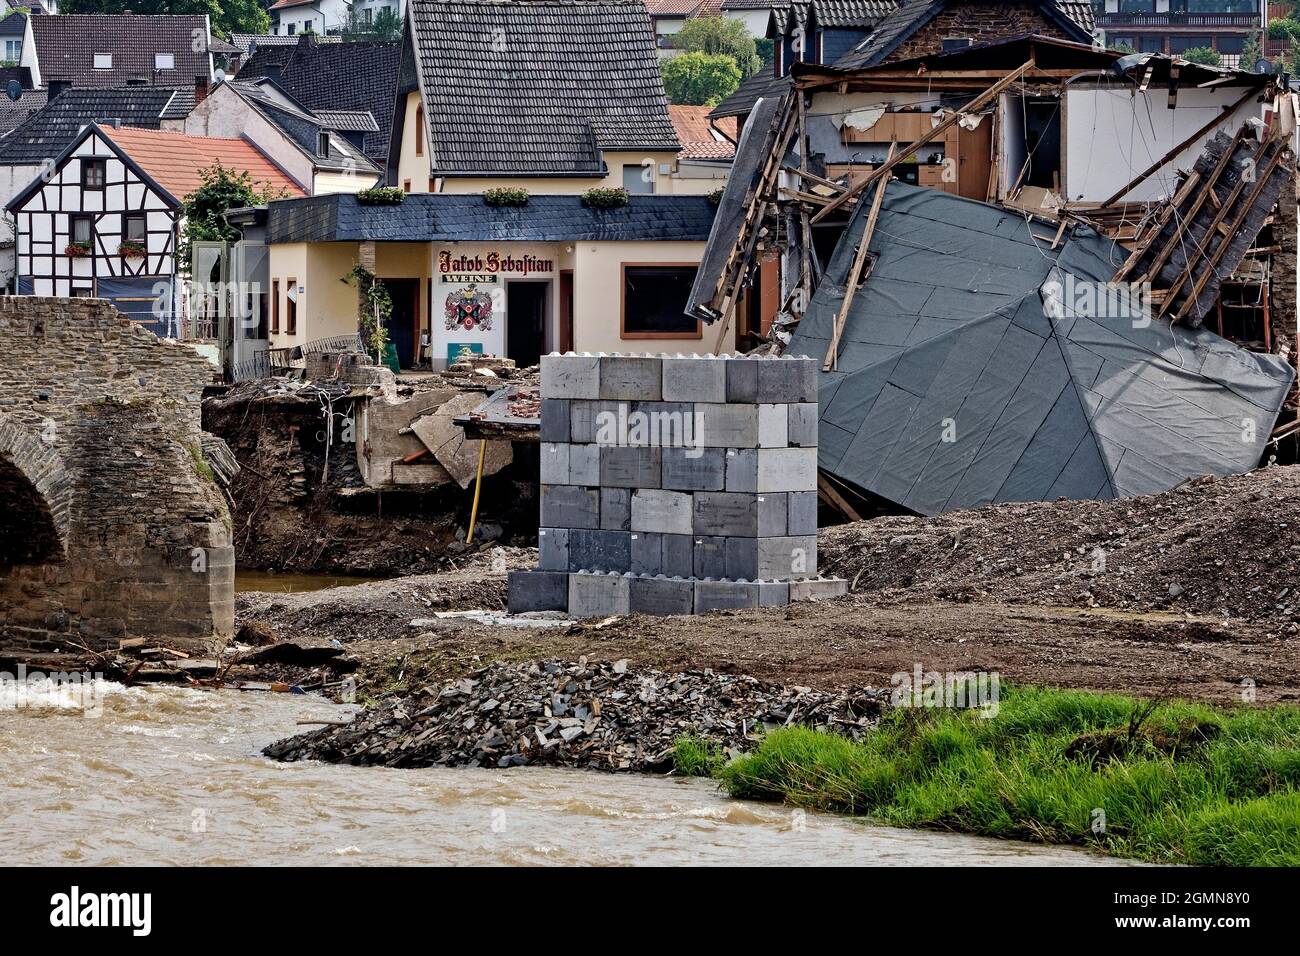 Disastro alluvione 2021 Ahrtal, valle Ahr, distrutto storico ponte Nepomuk sul fiume Ahr, Germania, Renania-Palatinato, Eifel, Weinort Rech Foto Stock